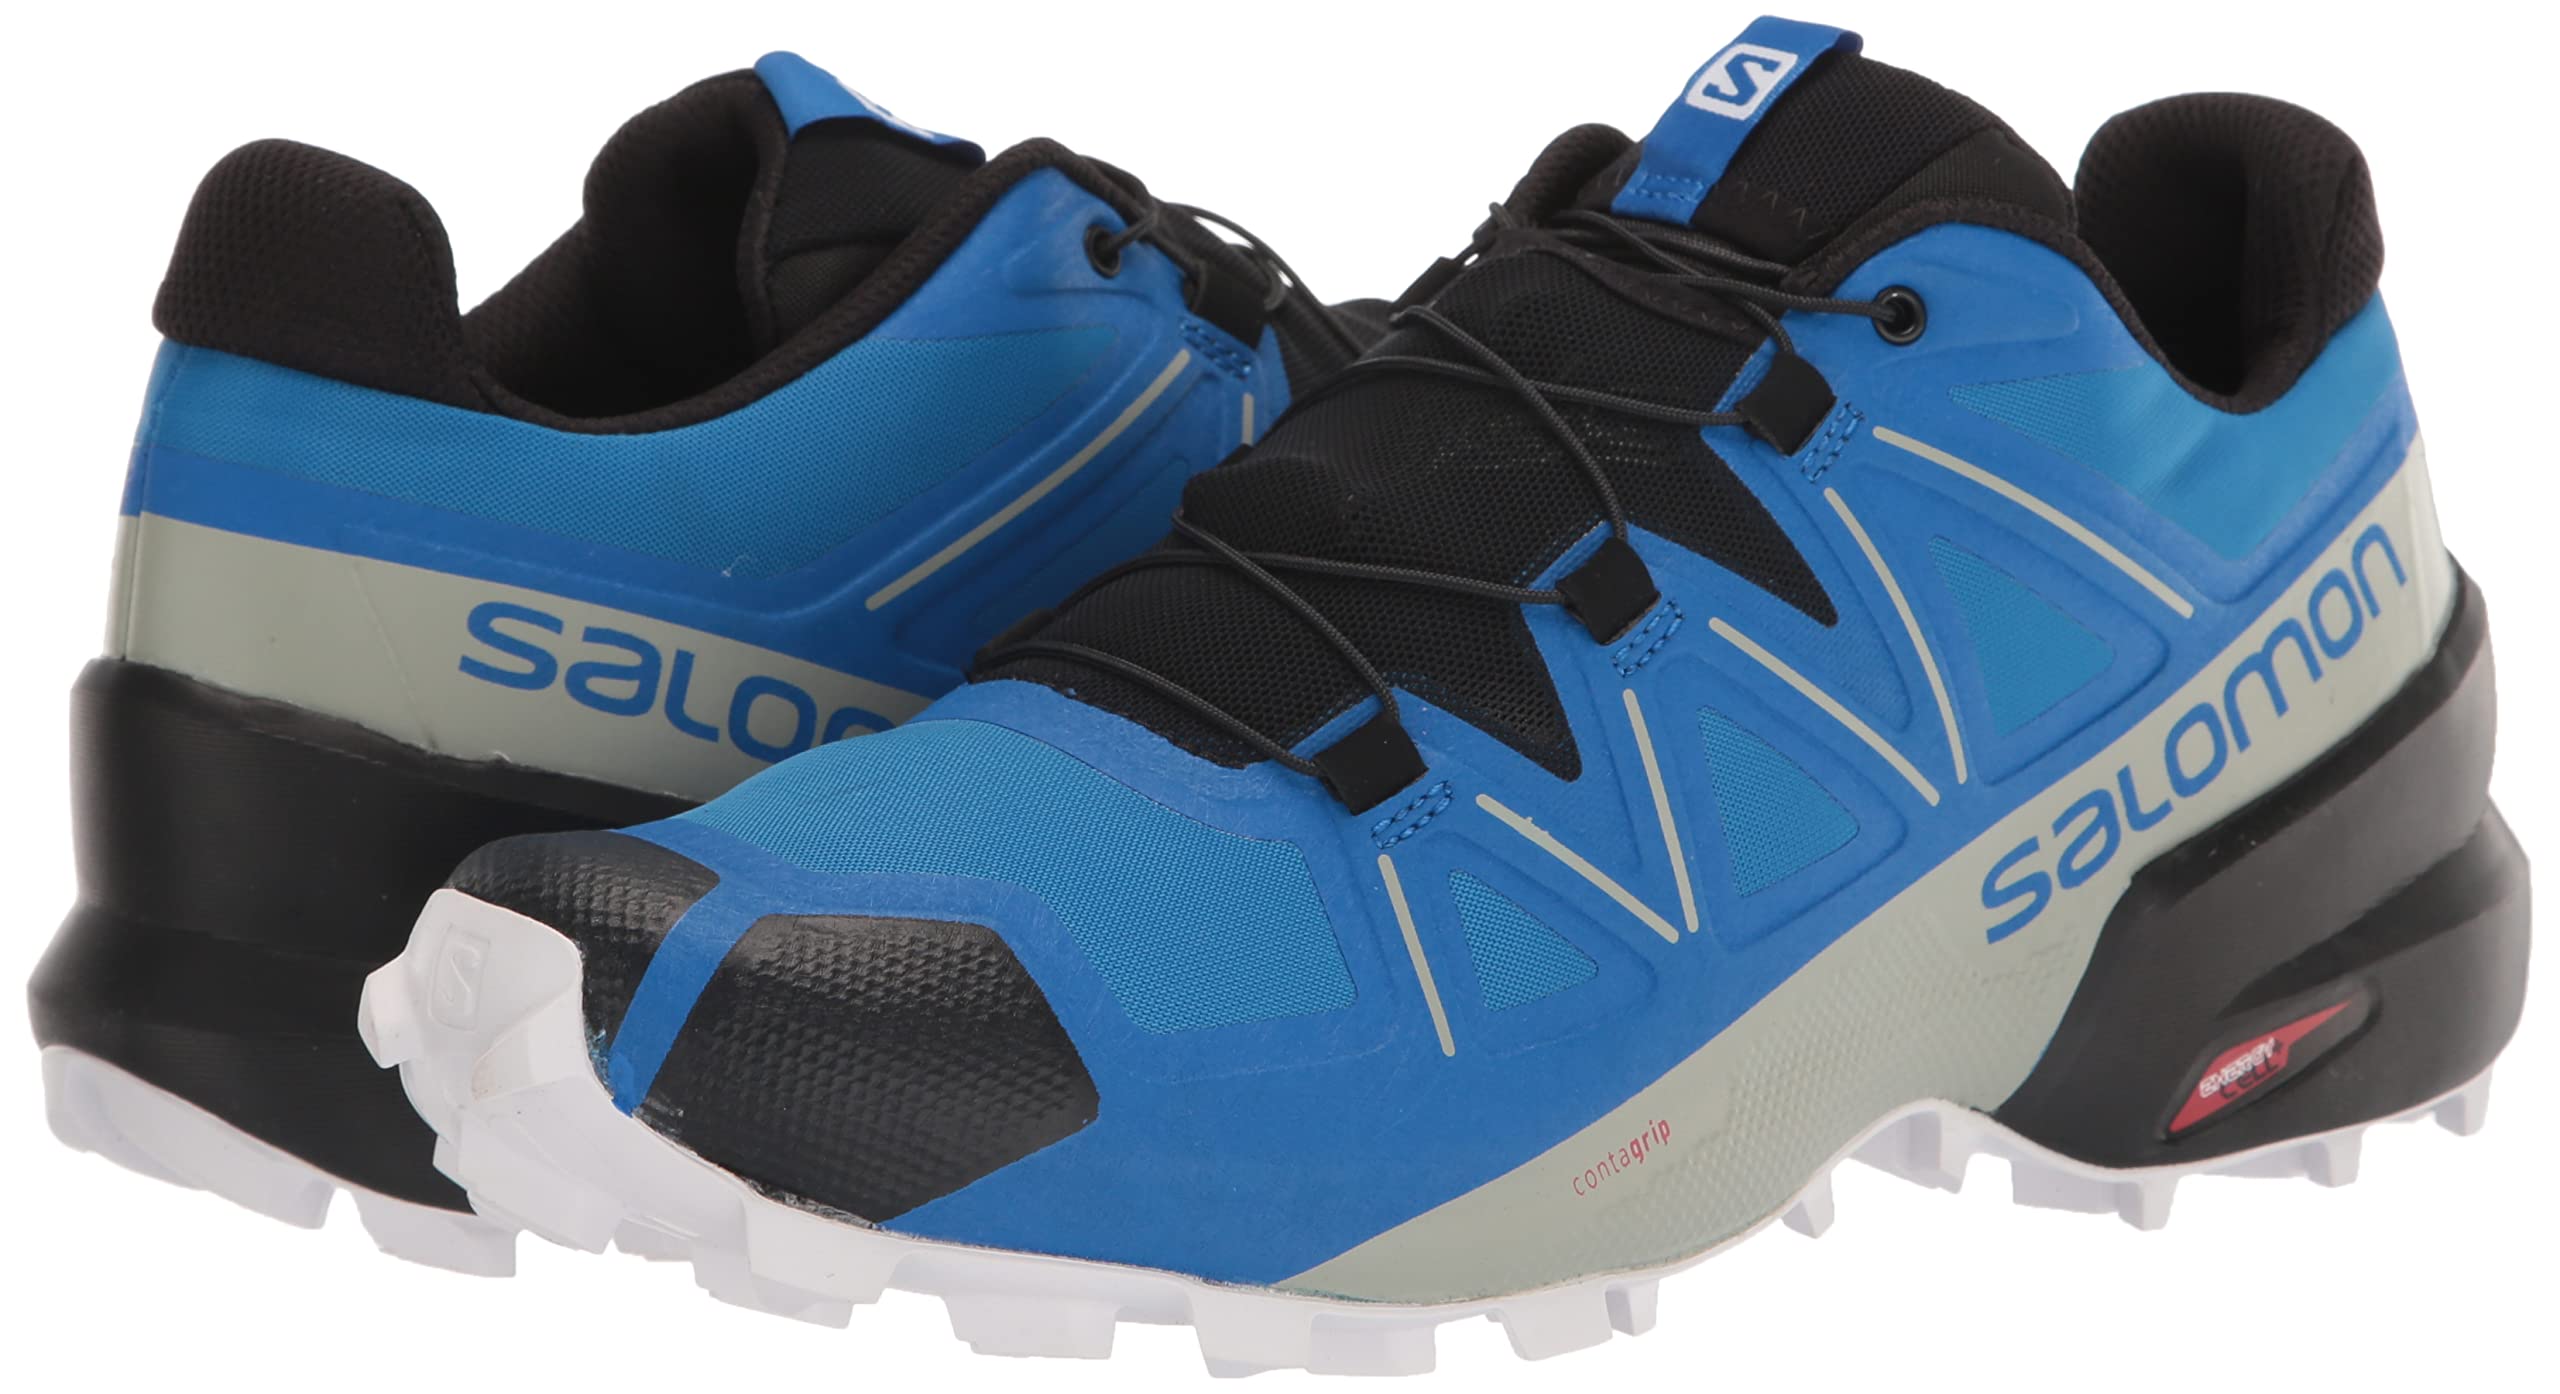 Salomon Men's Speedcross 5 Trail Running Shoes